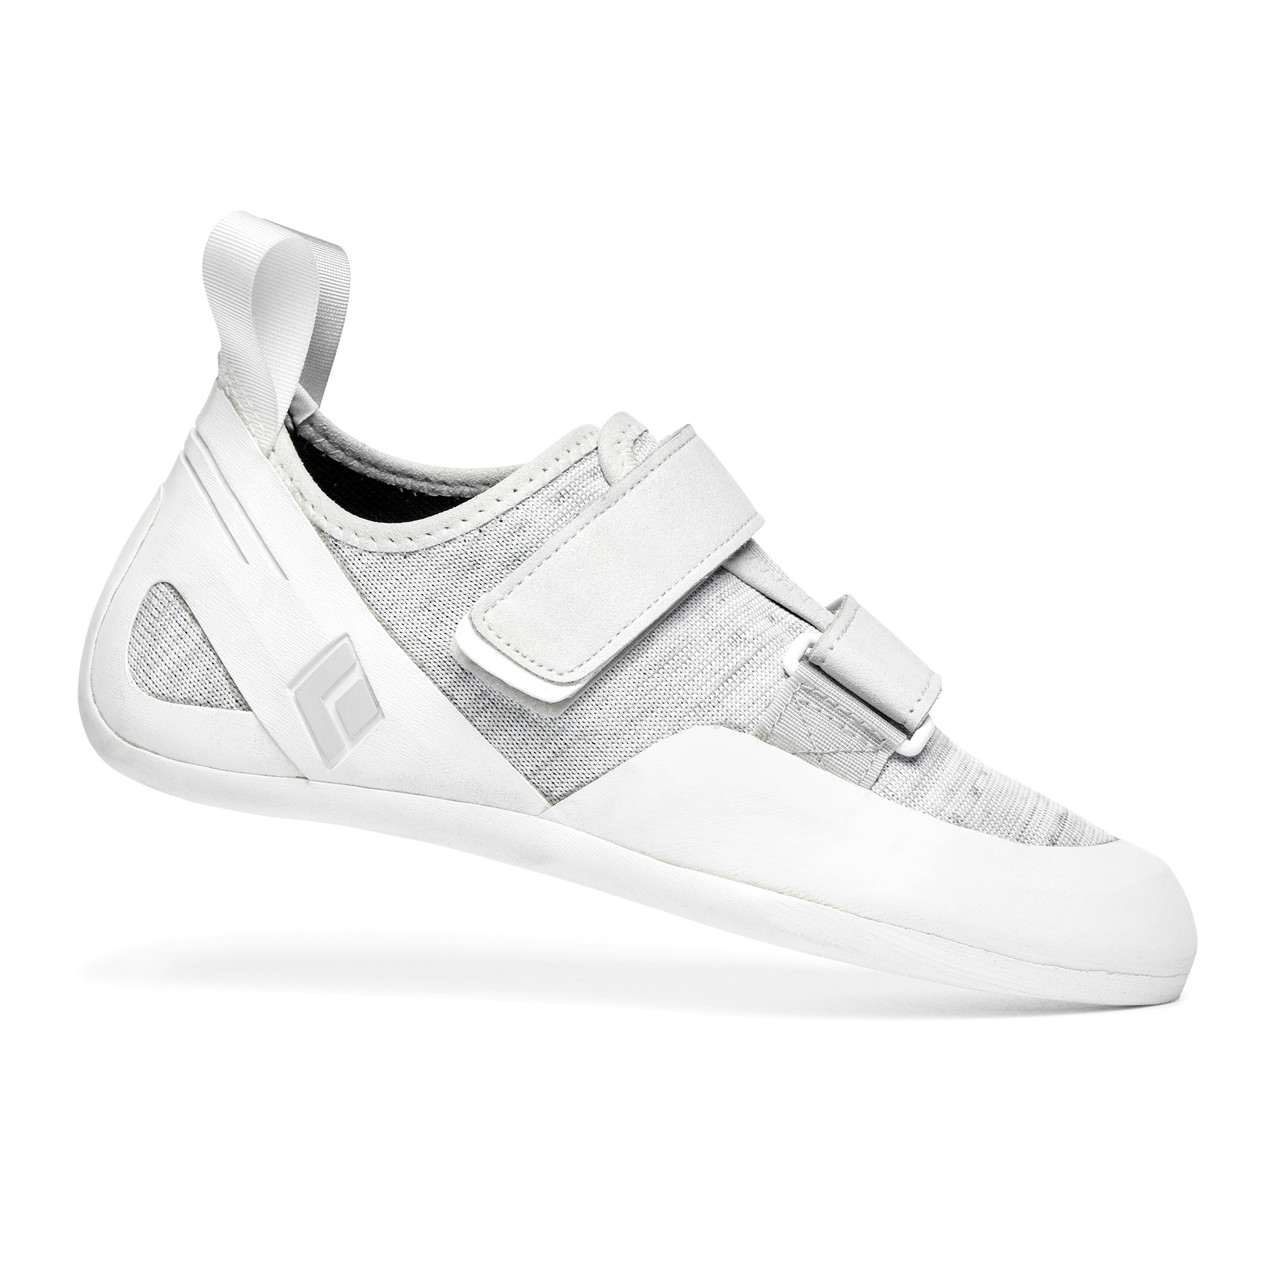 Momentum Rock Shoes White/Alloy